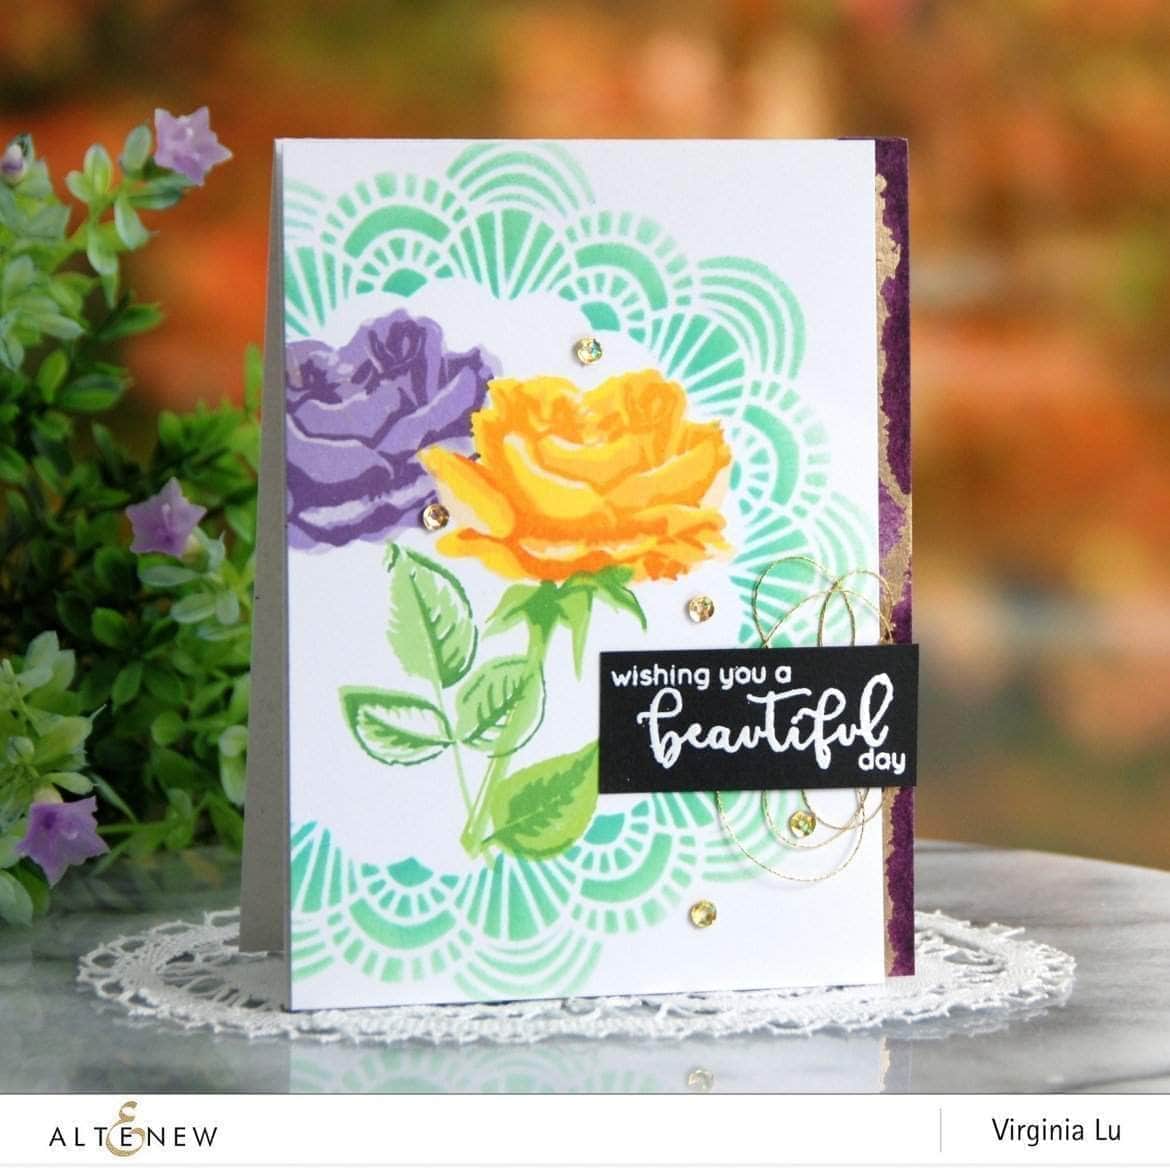 Altenew Creativity Kit Bundle Framed Beauty Creativity Cardmaking Kit